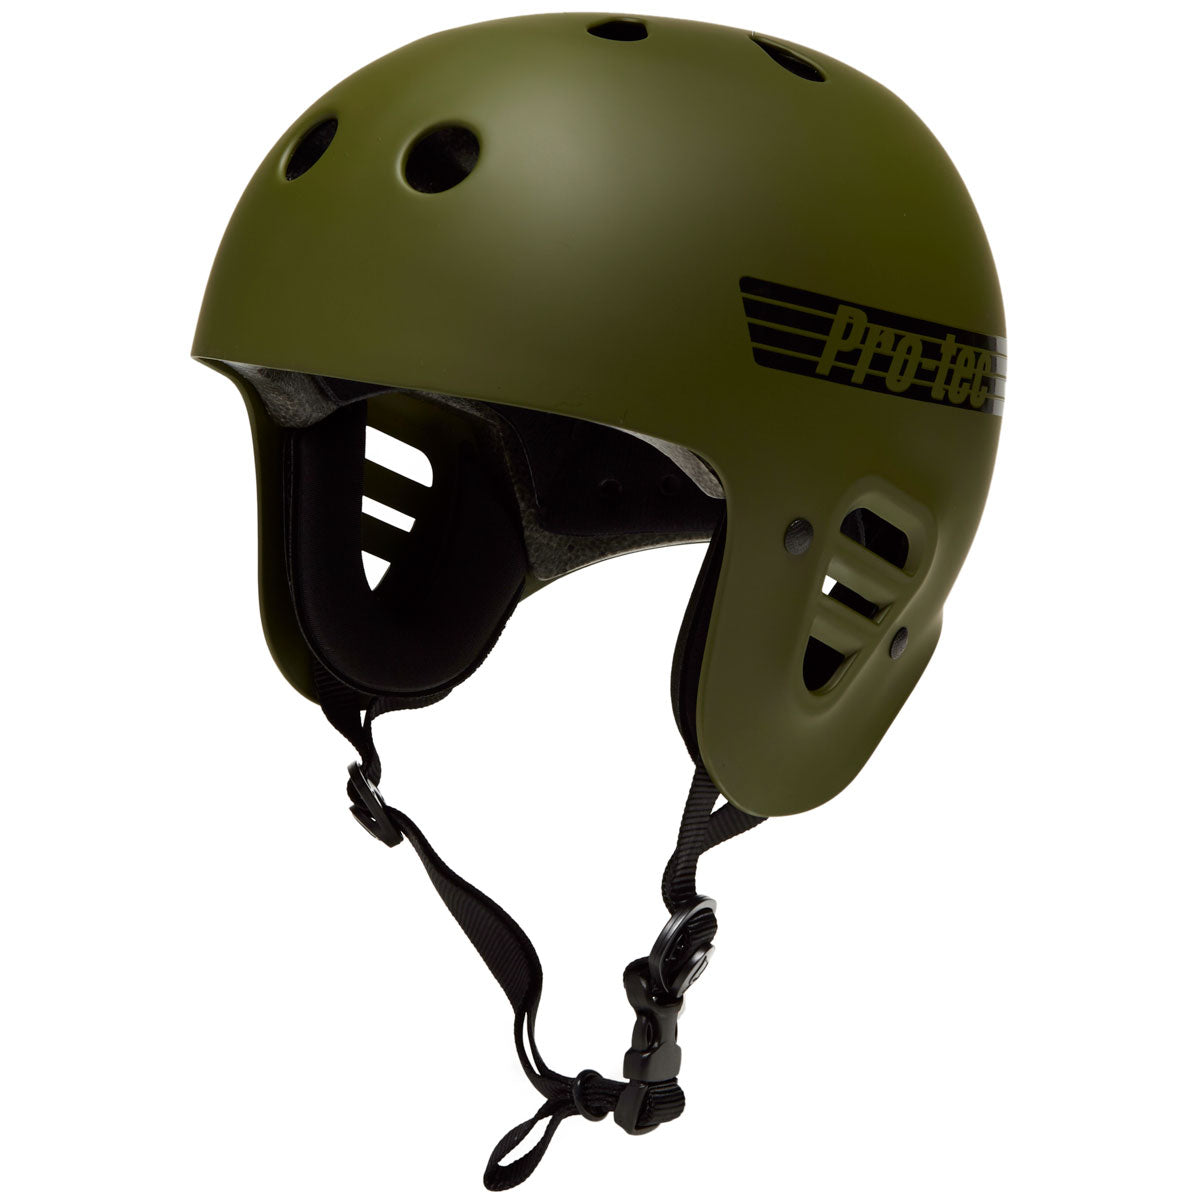 Pro-Tec Full Cut Certified Helmet - Matte Olive image 1